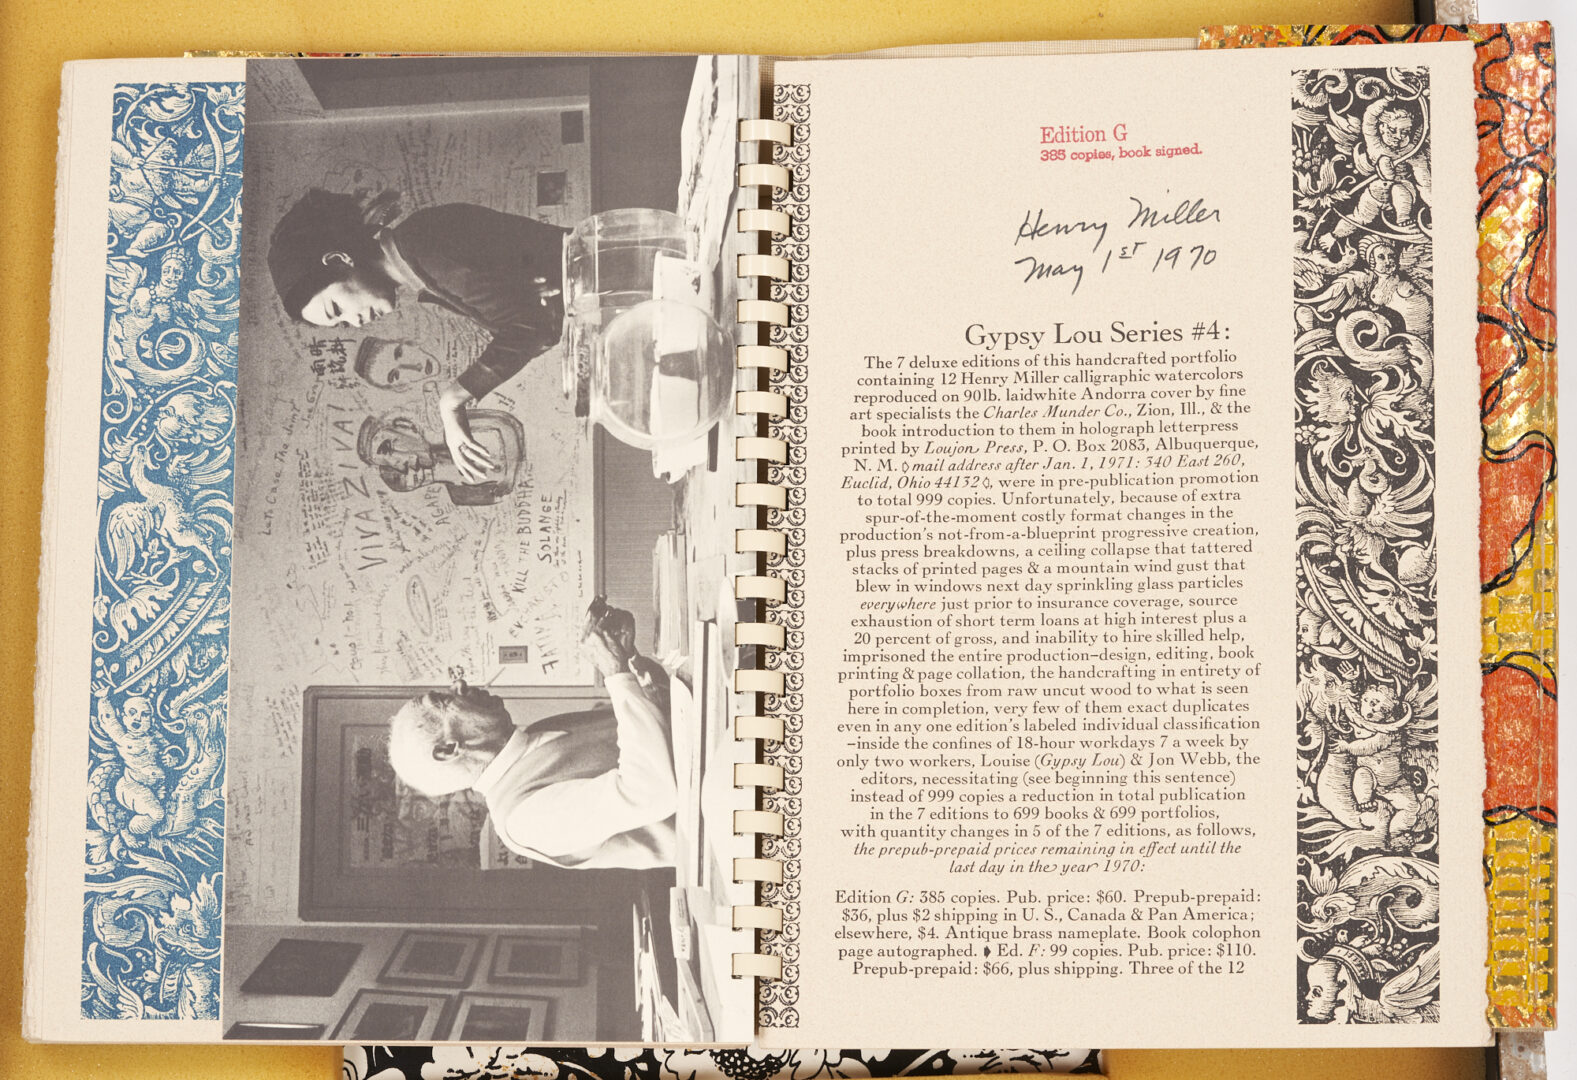 Lot 619: Henry Miller, Insomnia or the Devil at Large; Signed; Loujon Press 1970